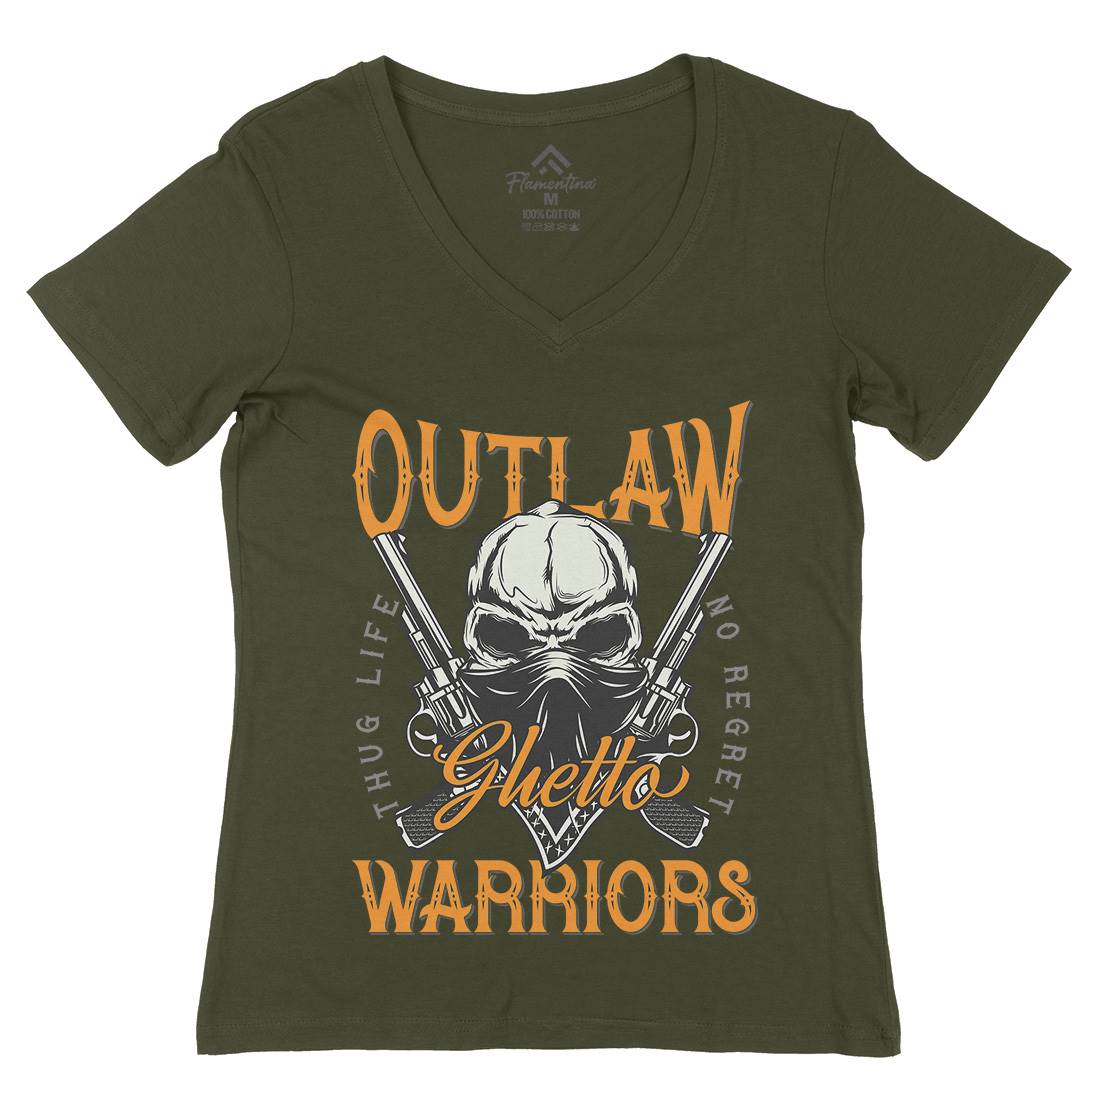 Outlaw Warriors Womens Organic V-Neck T-Shirt Retro D959